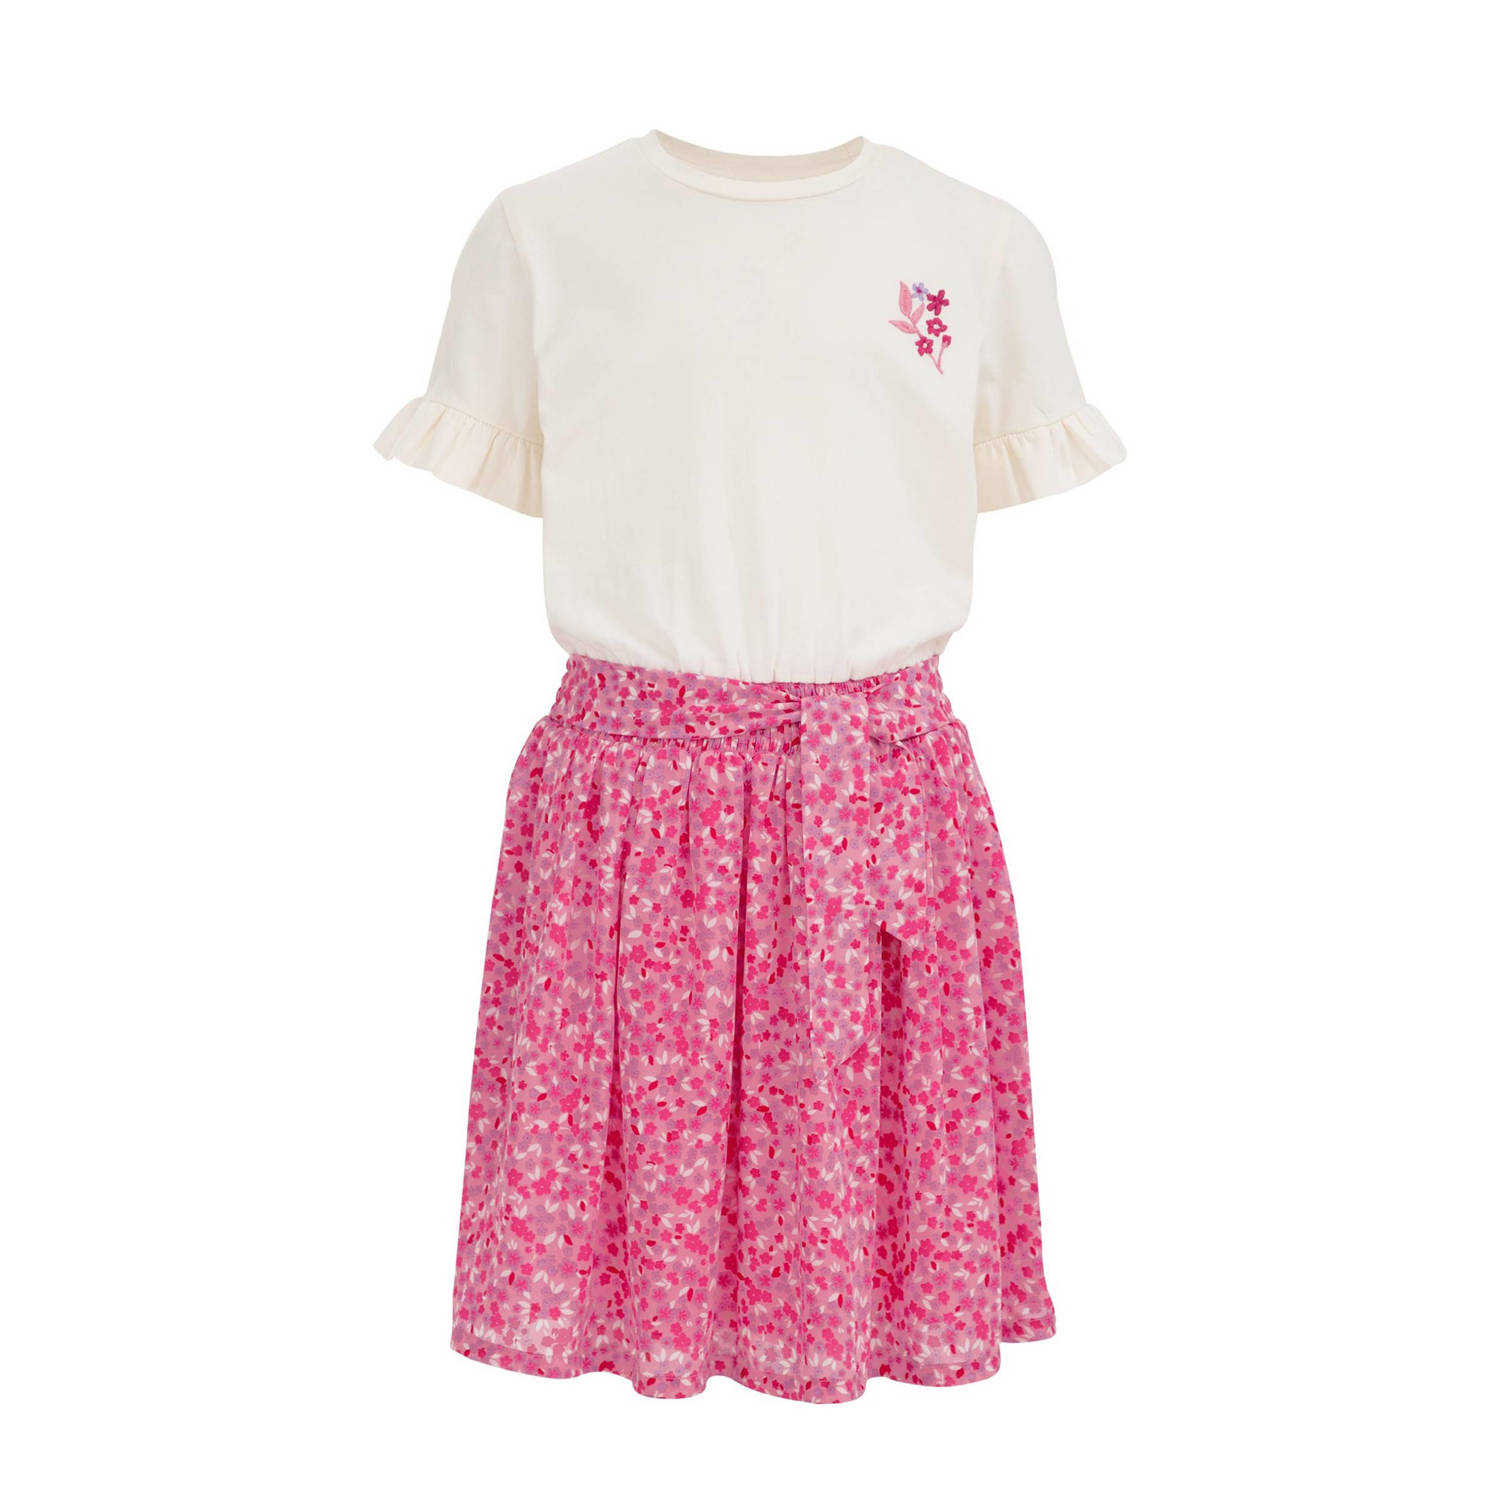 WE Fashion gebloemde jurk roze Meisjes Stretchkatoen Ronde hals Bloemen 110 116